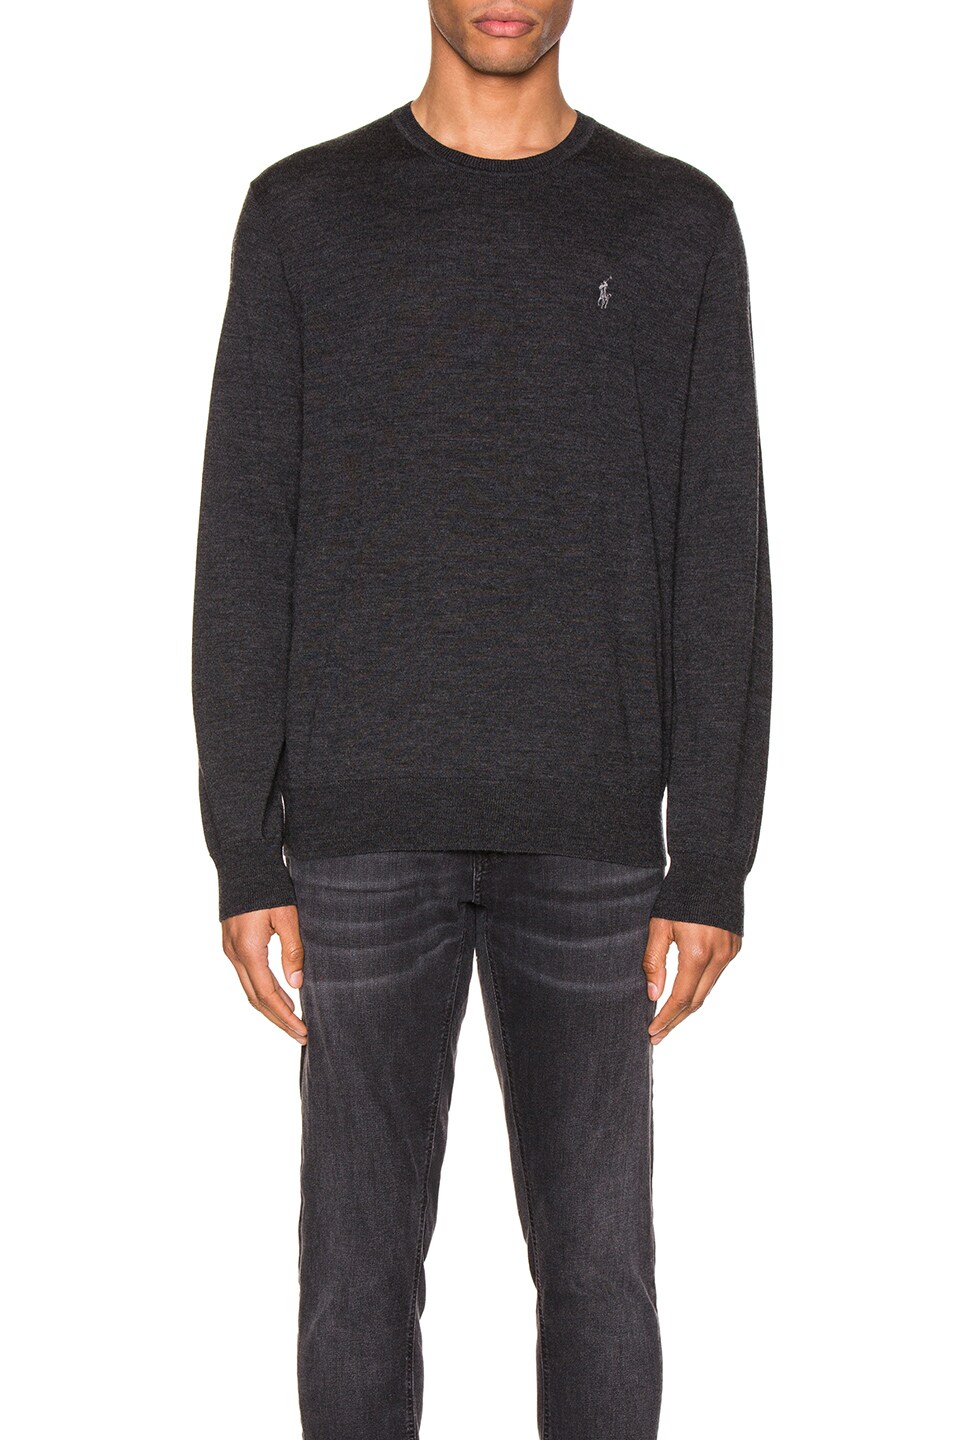 Image 1 of Polo Ralph Lauren Merino Wool Long Sleeve Sweater in Dark Granite Heather